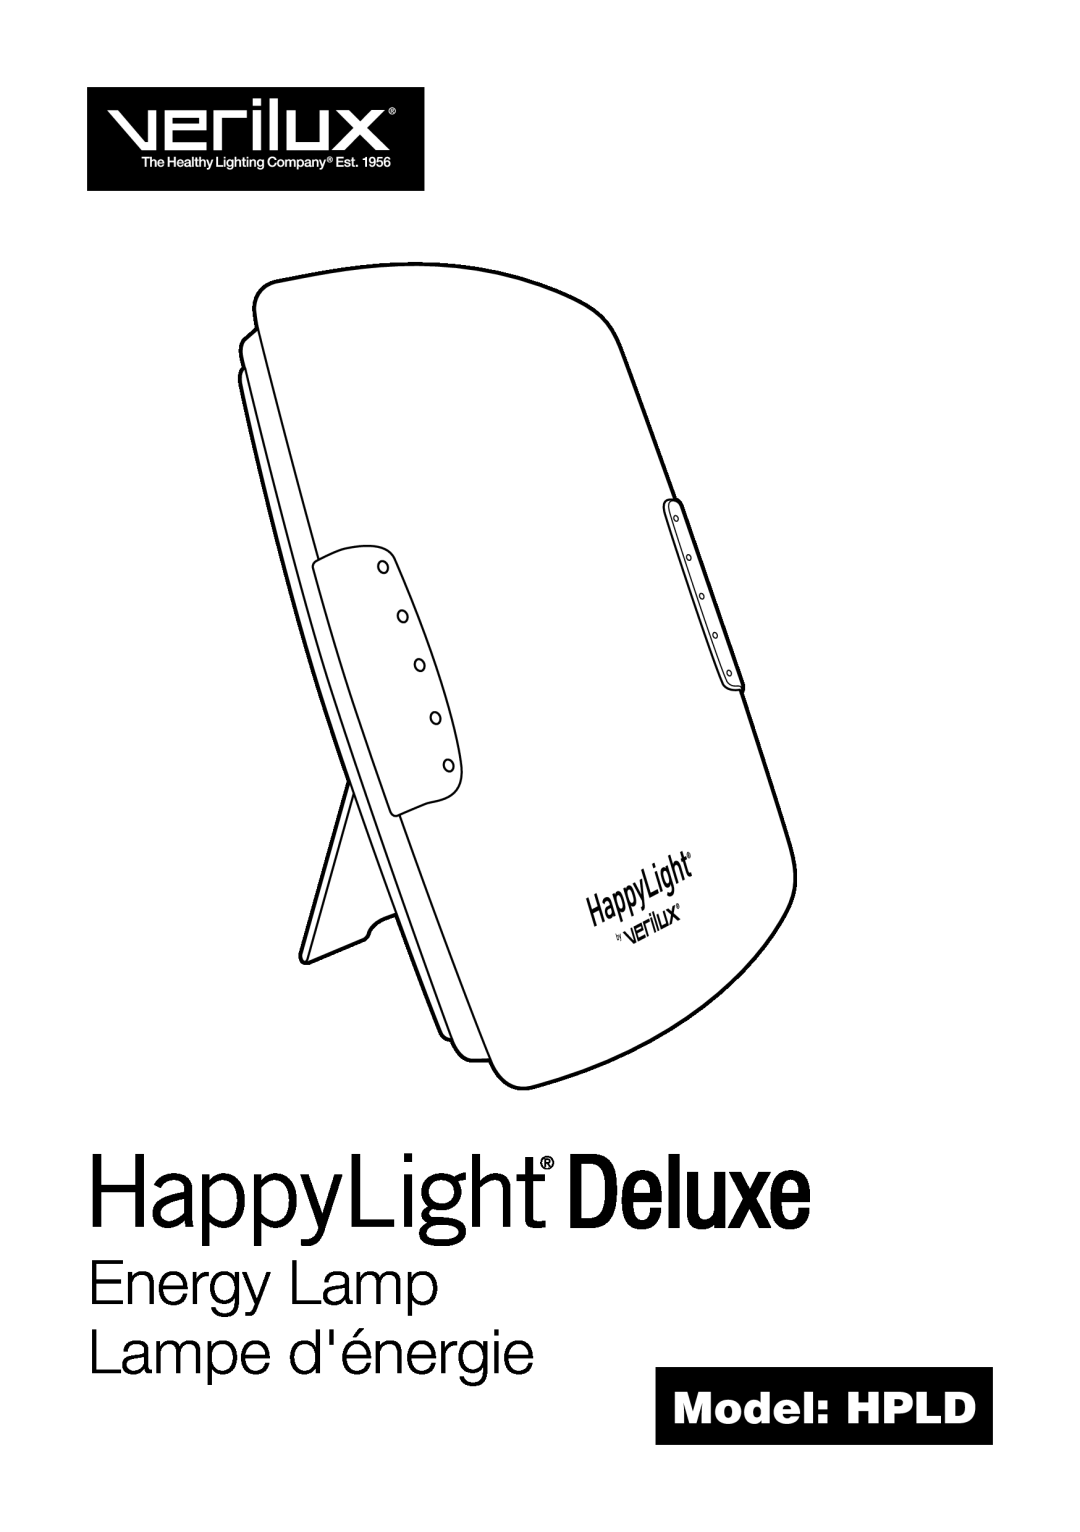 Verilux manual Energy Lamp Lampe dénergie, Model HPLD 